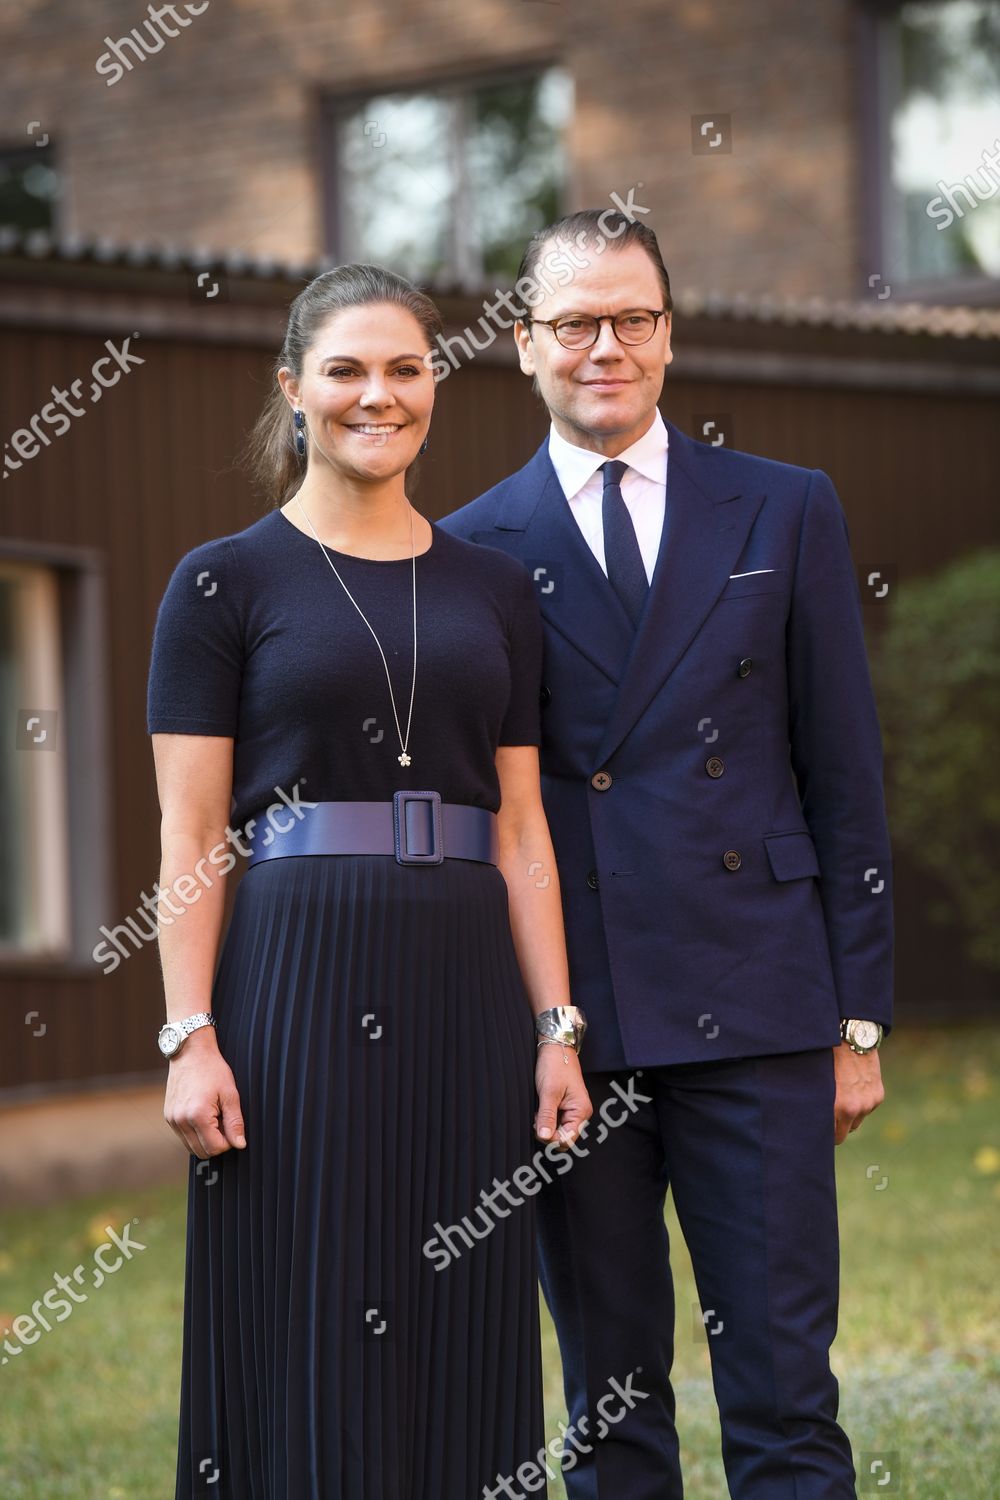 crown-princess-victoria-and-prince-daniel-visit-the-swedish-performing-arts-association-stockholm-sweden-shutterstock-editorial-10788094w.jpg